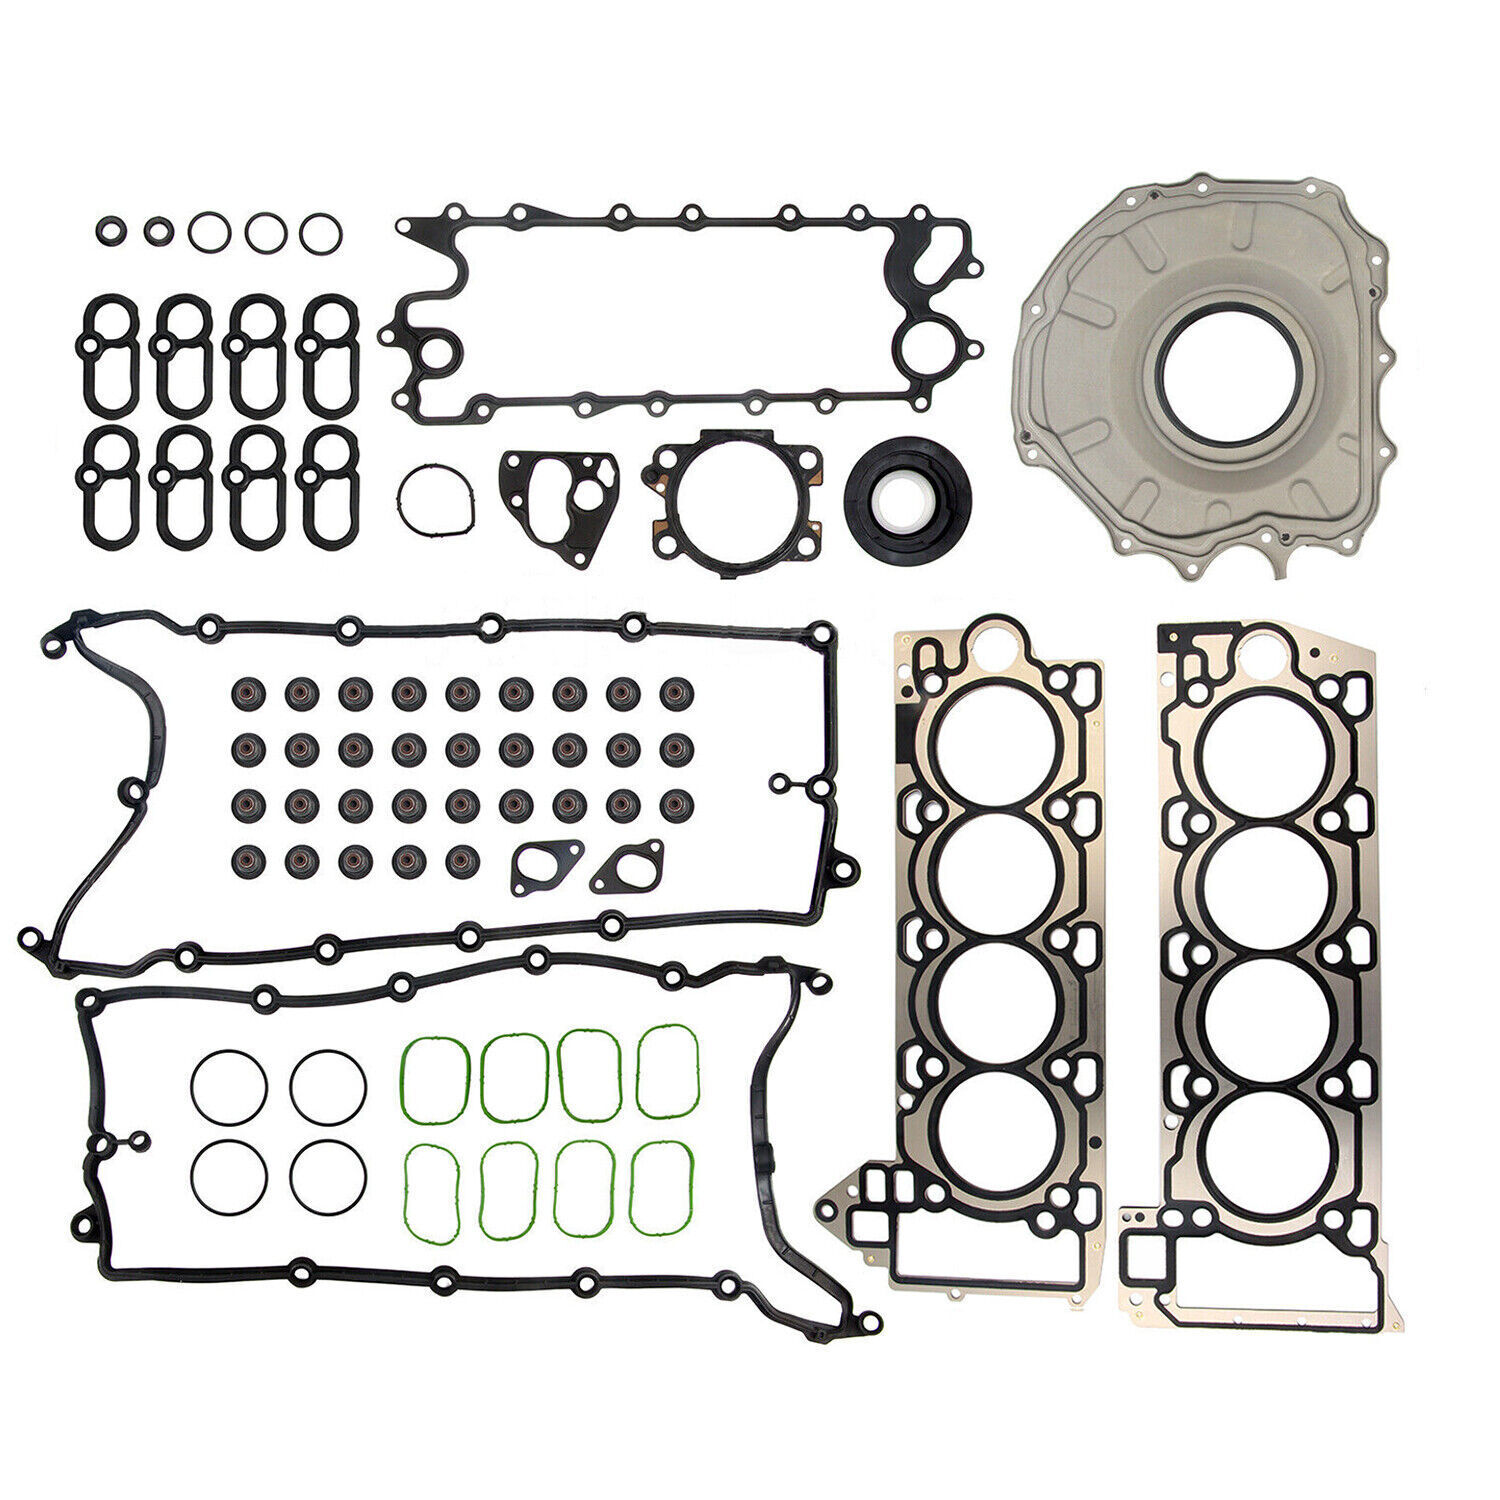 Engine Rebuild Kit & Crankshaft Rods Timing Kit For Jaguar Land Rover AJ133 5.0L